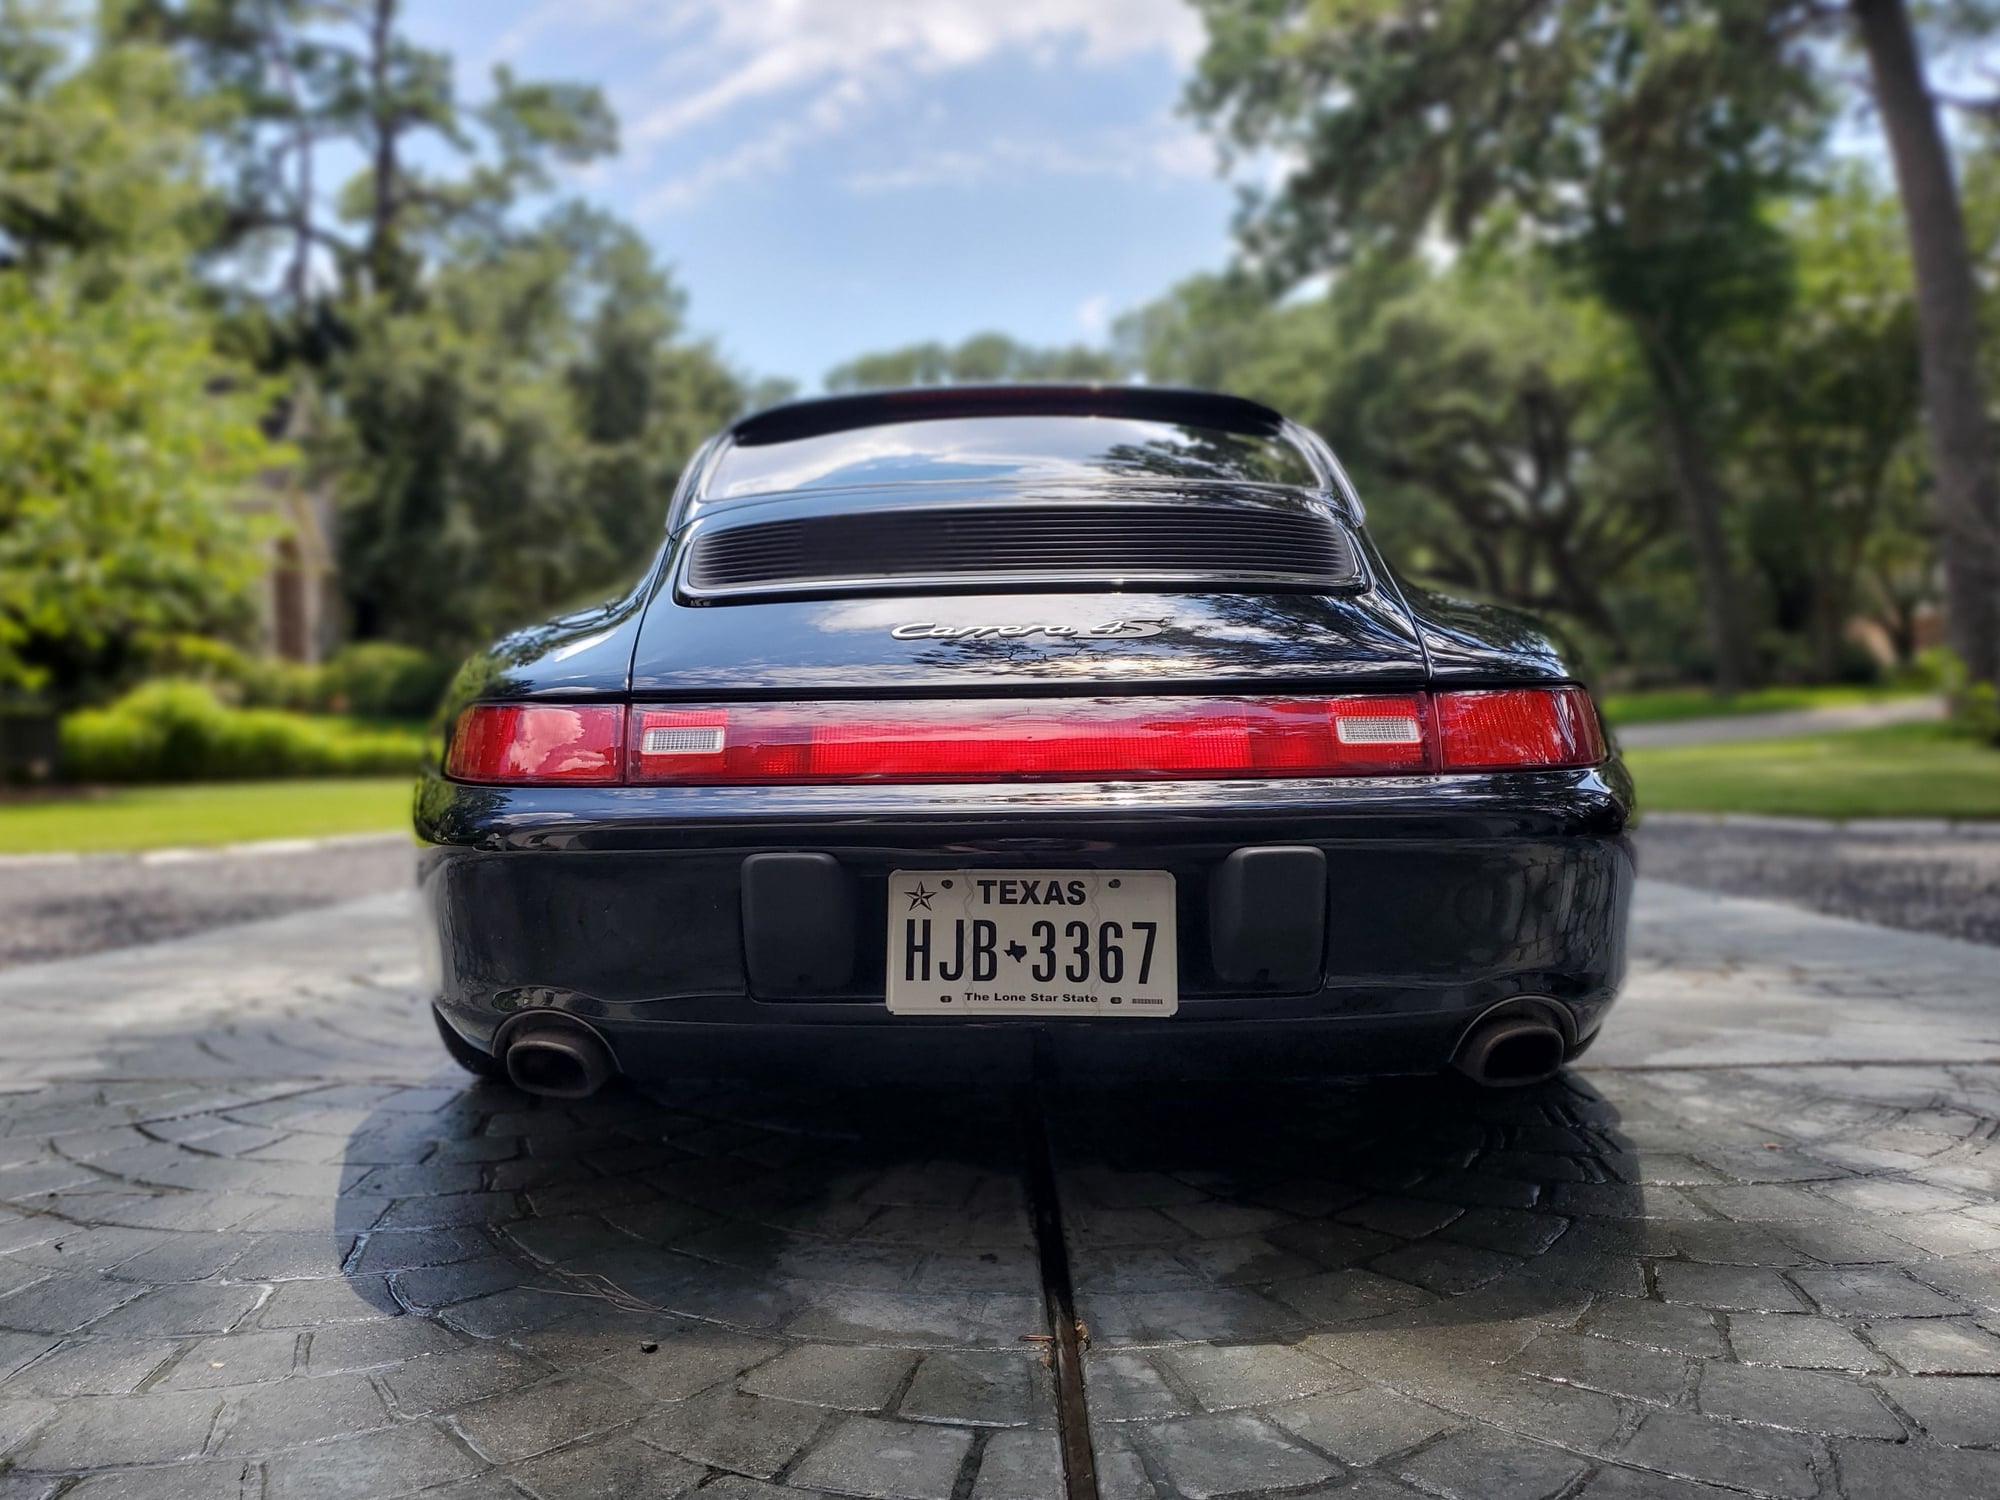 1996 Porsche 911 - 1996 C4S (993), Black over Tan, 6MT, 54xxx miles - Used - VIN WPOAA2996TS322164 - 54,950 Miles - 6 cyl - AWD - Manual - Coupe - Black - Houston, TX 77024, United States